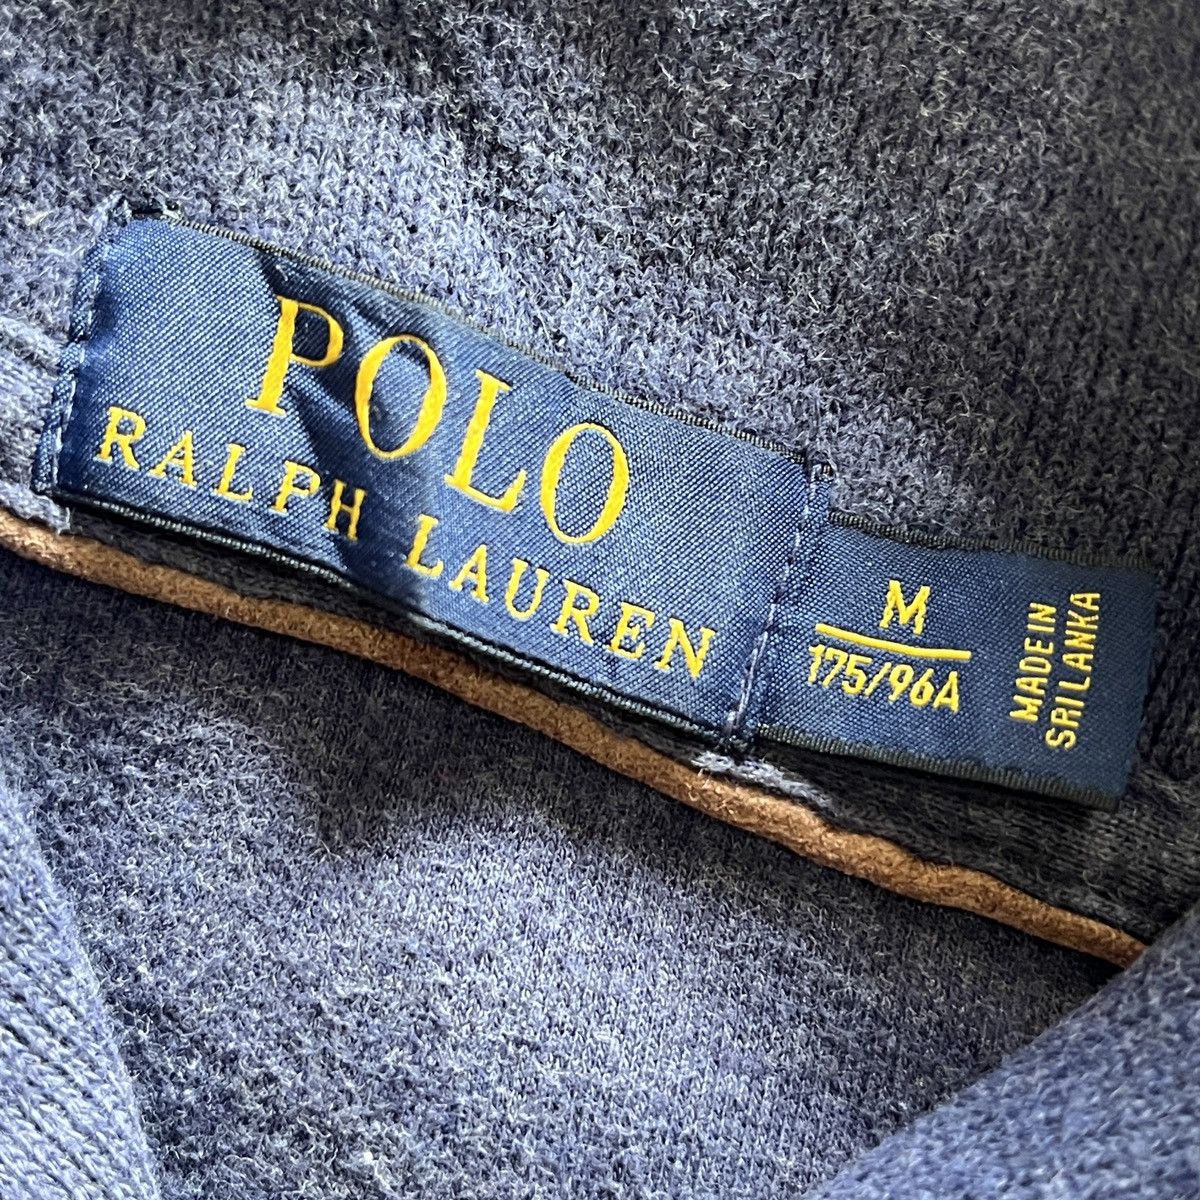 Vintage Polo Ralph Lauren Jumper Sweater - 4